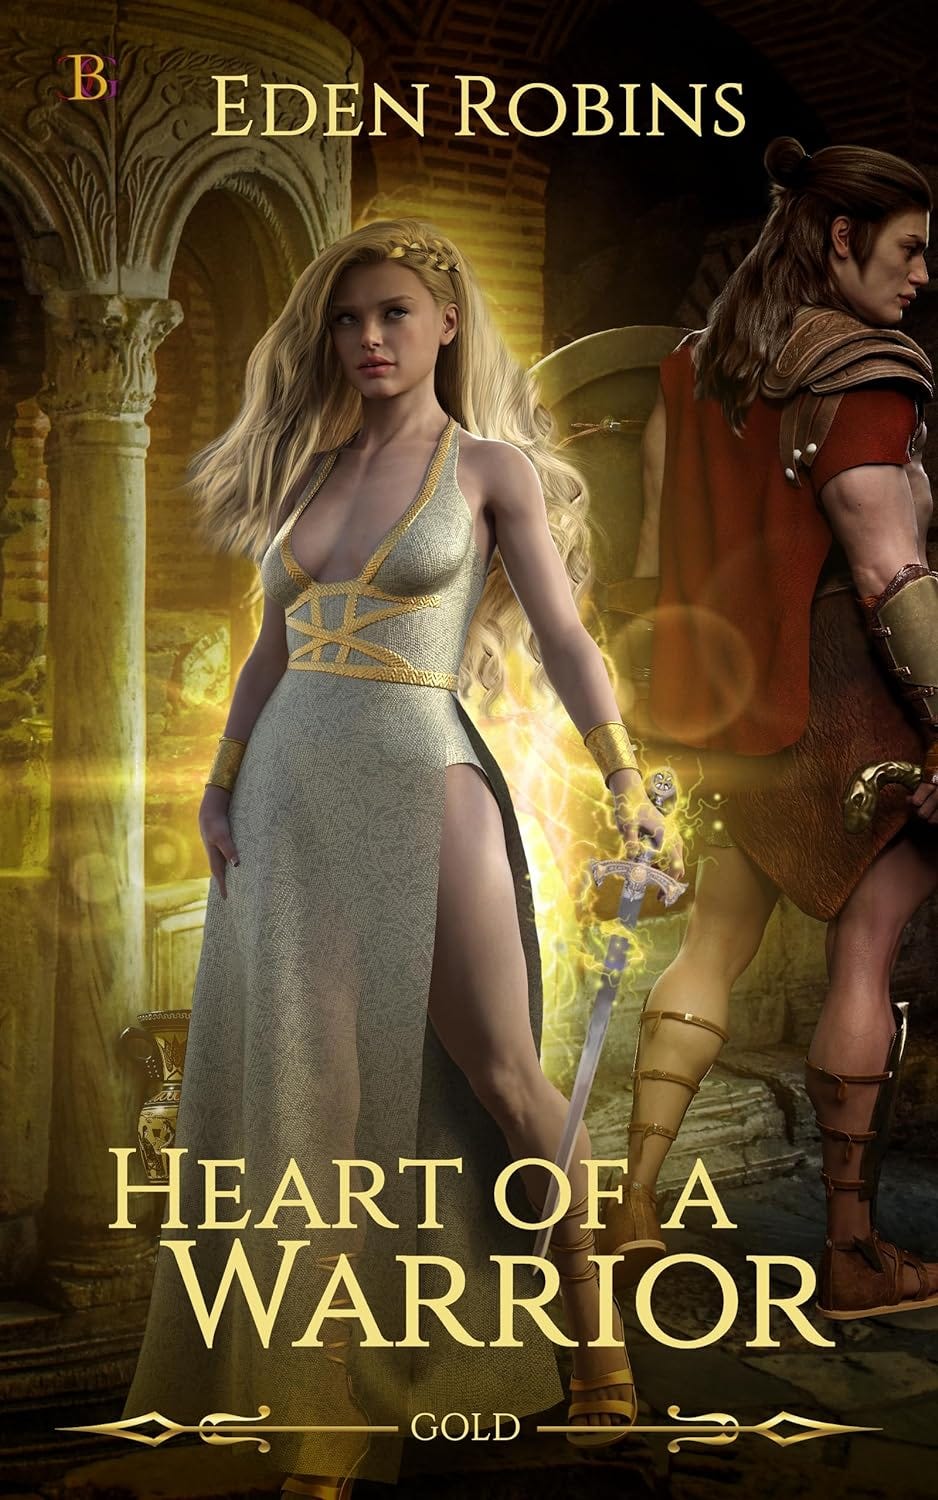 Book Cover for Eden Robins' Gold: Heart of a Warrior novel